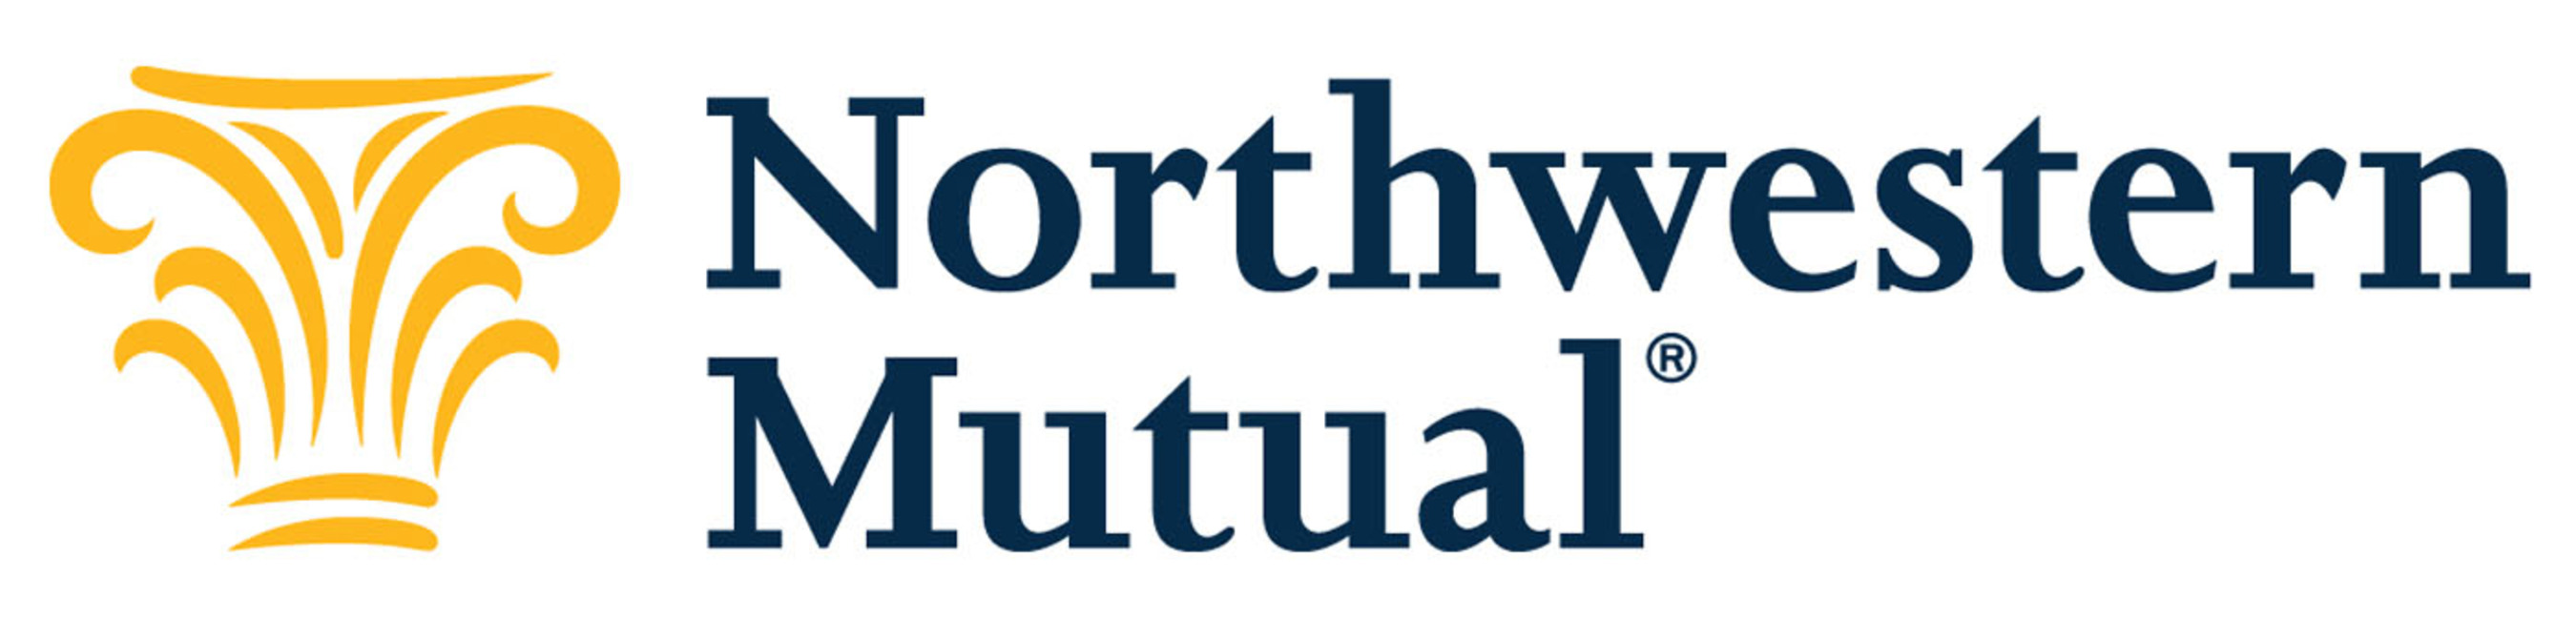 northwest-mutual-logo.jpg